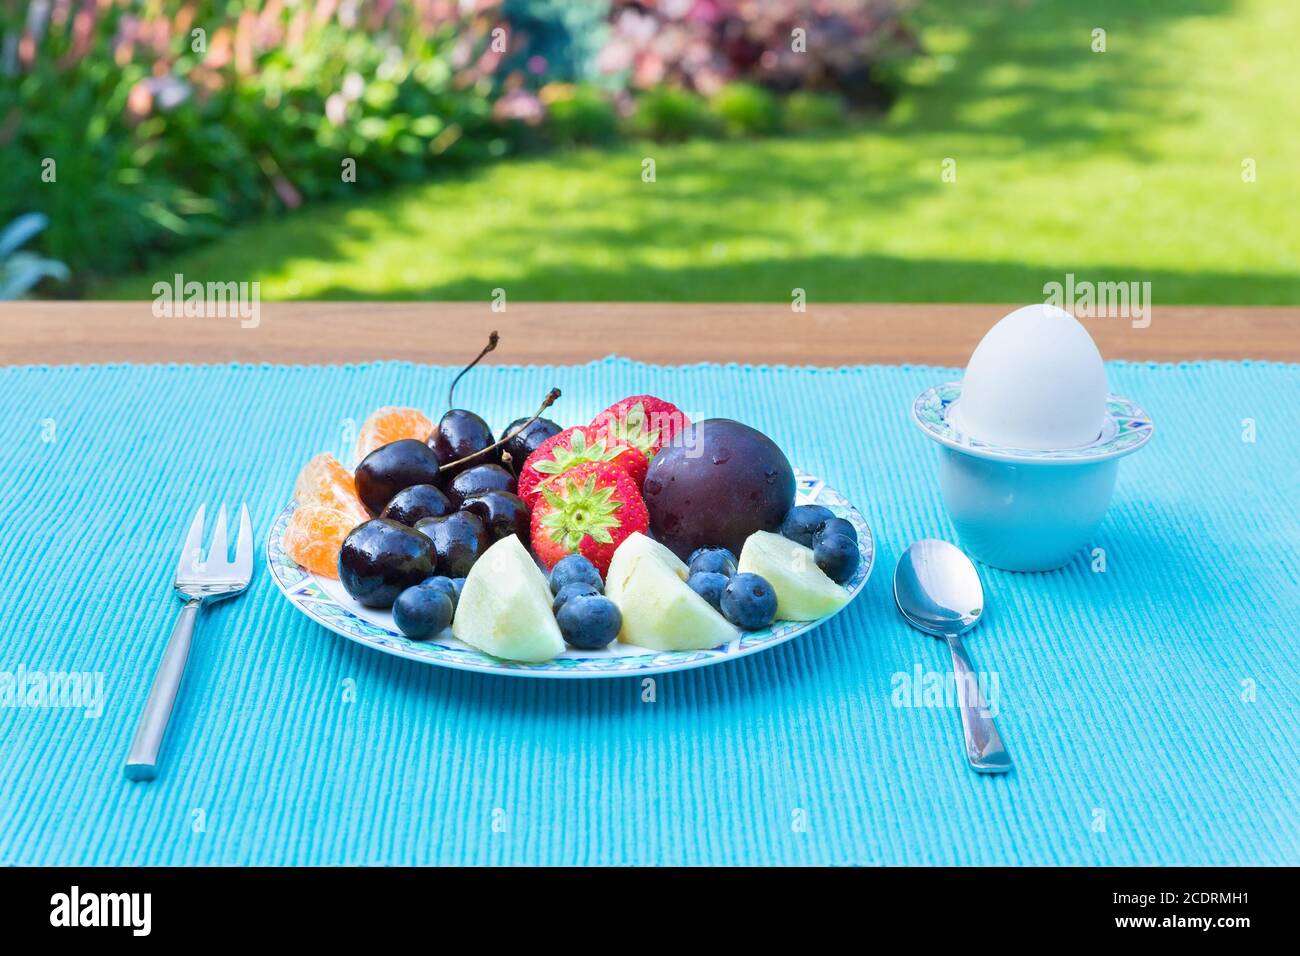 Fruit plate on table outside in garden Stock Photo